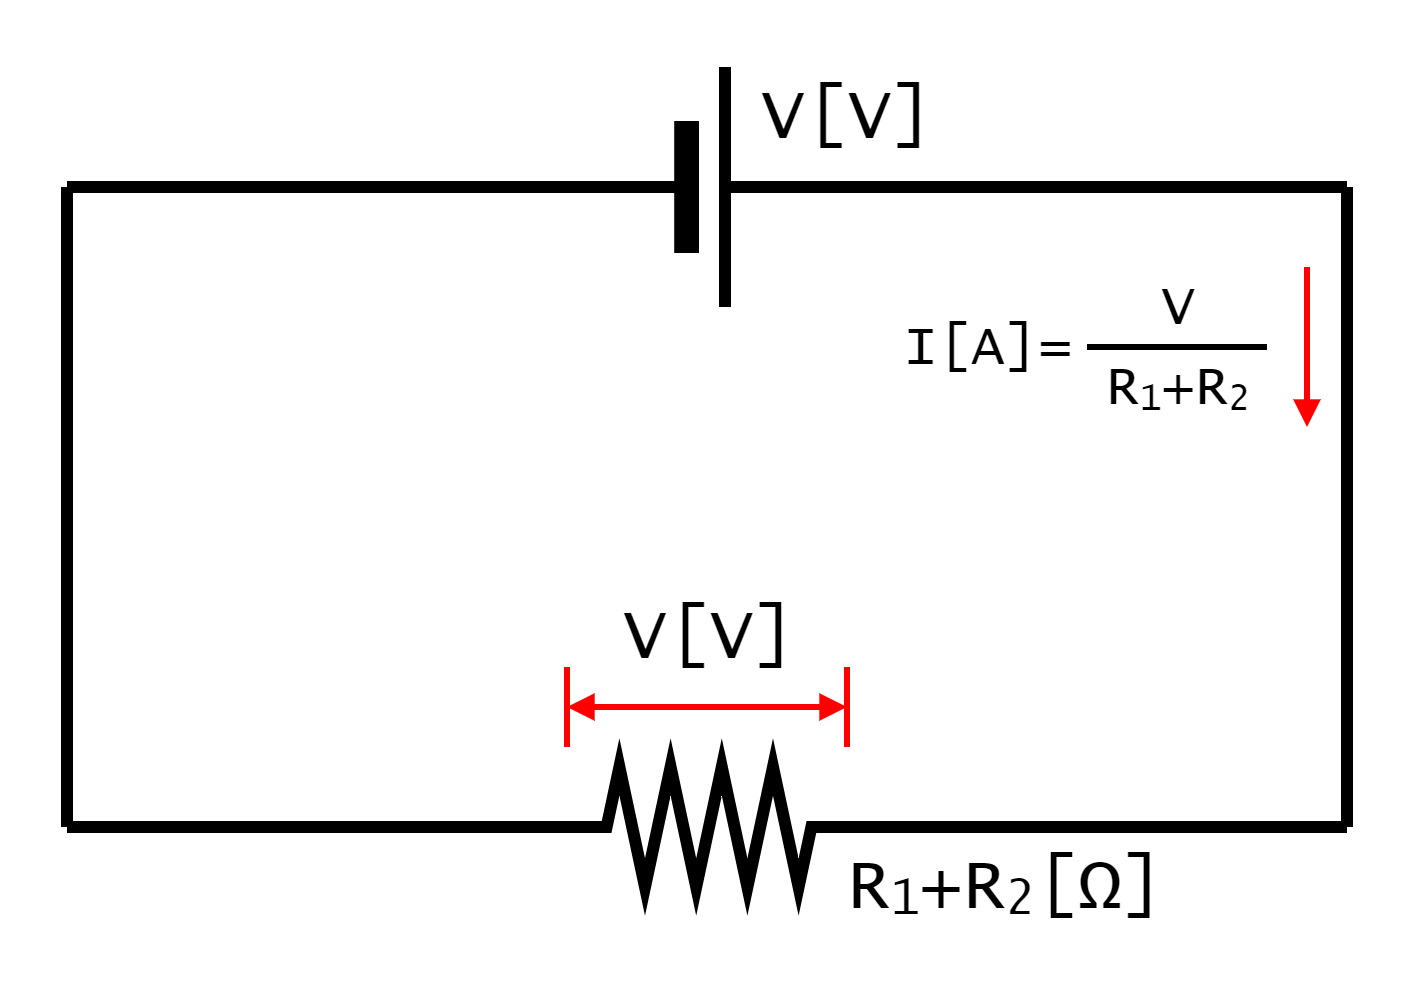 図1-4-2-2.合成抵抗と電流